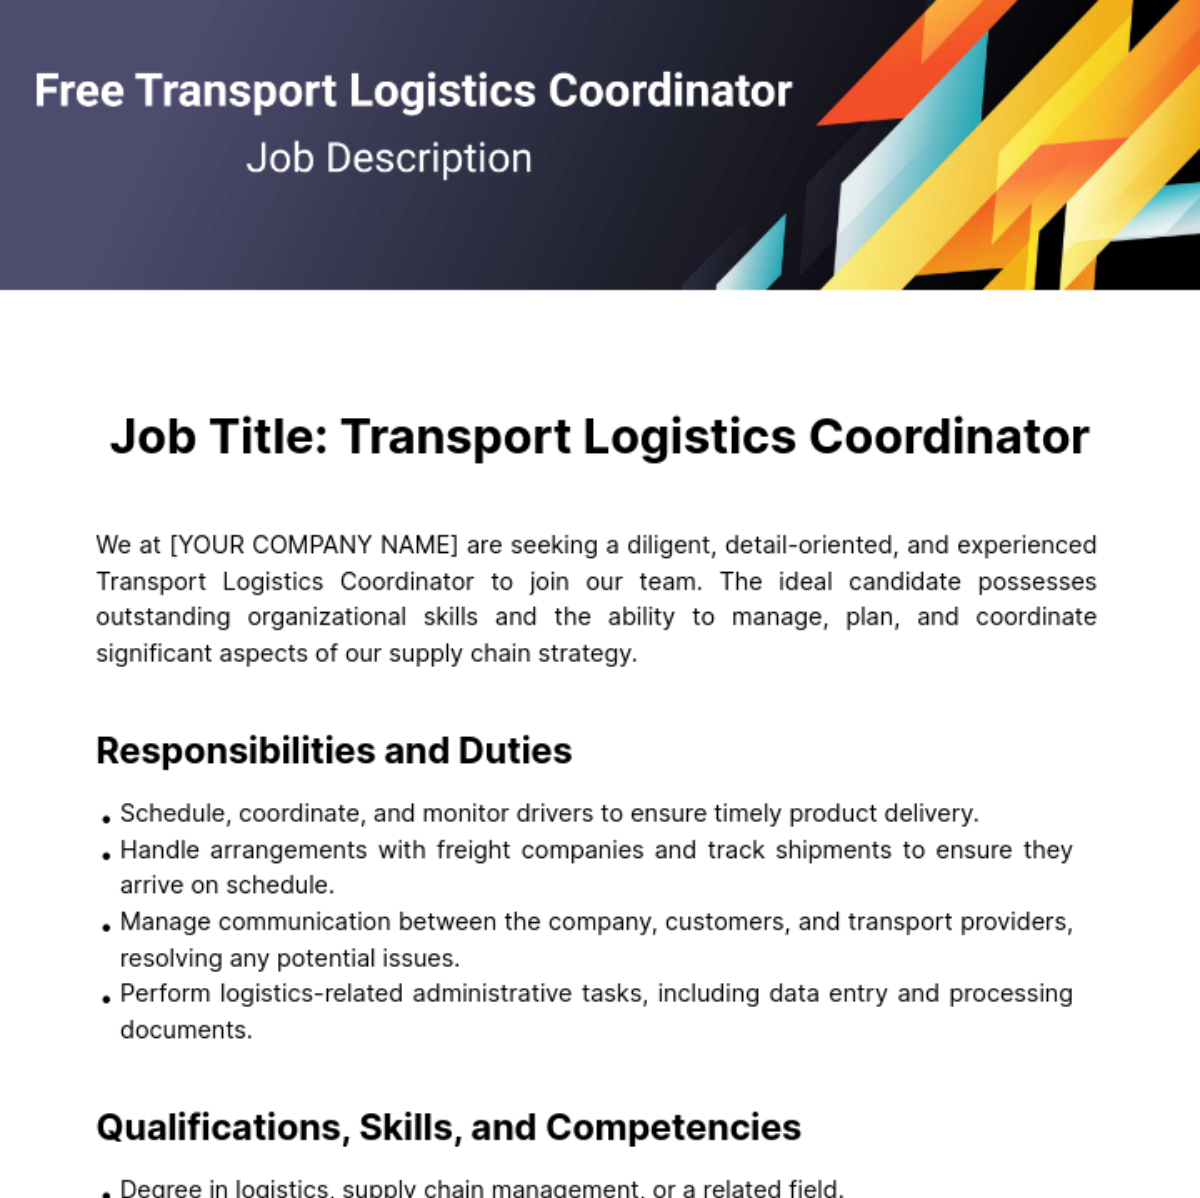 Free Transport Logistics Coordinator Job Description Template